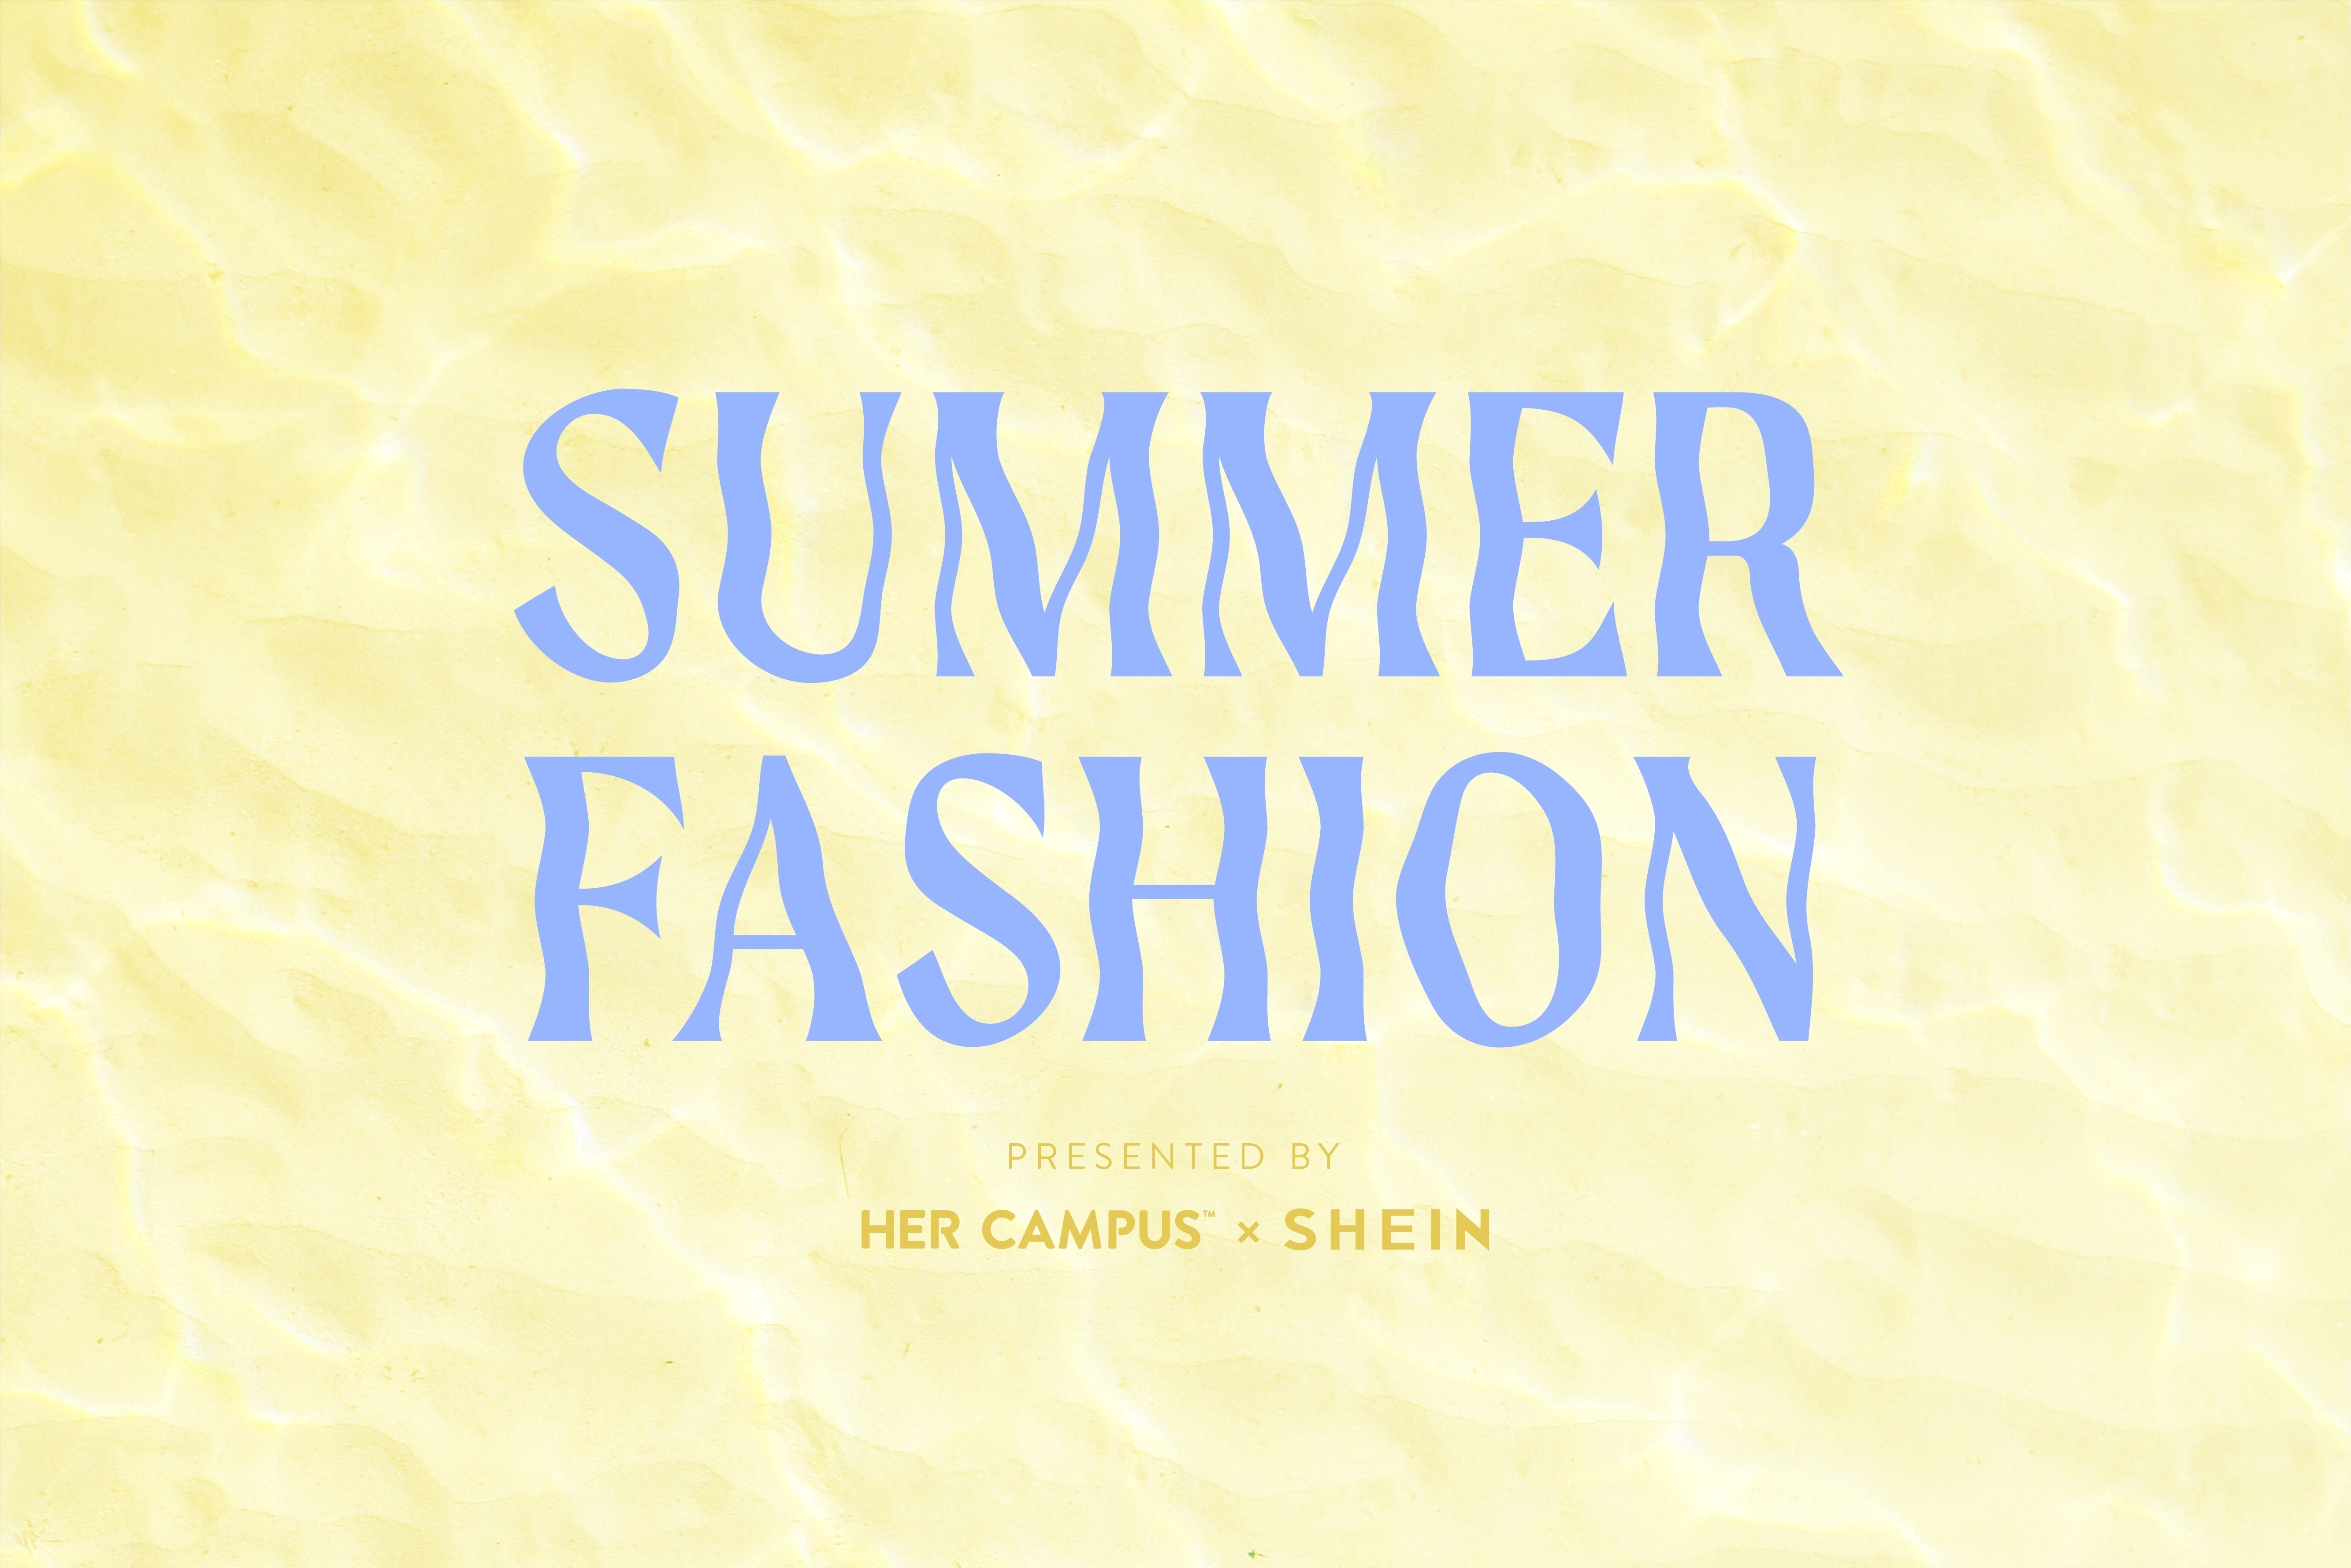 Summer Fashion